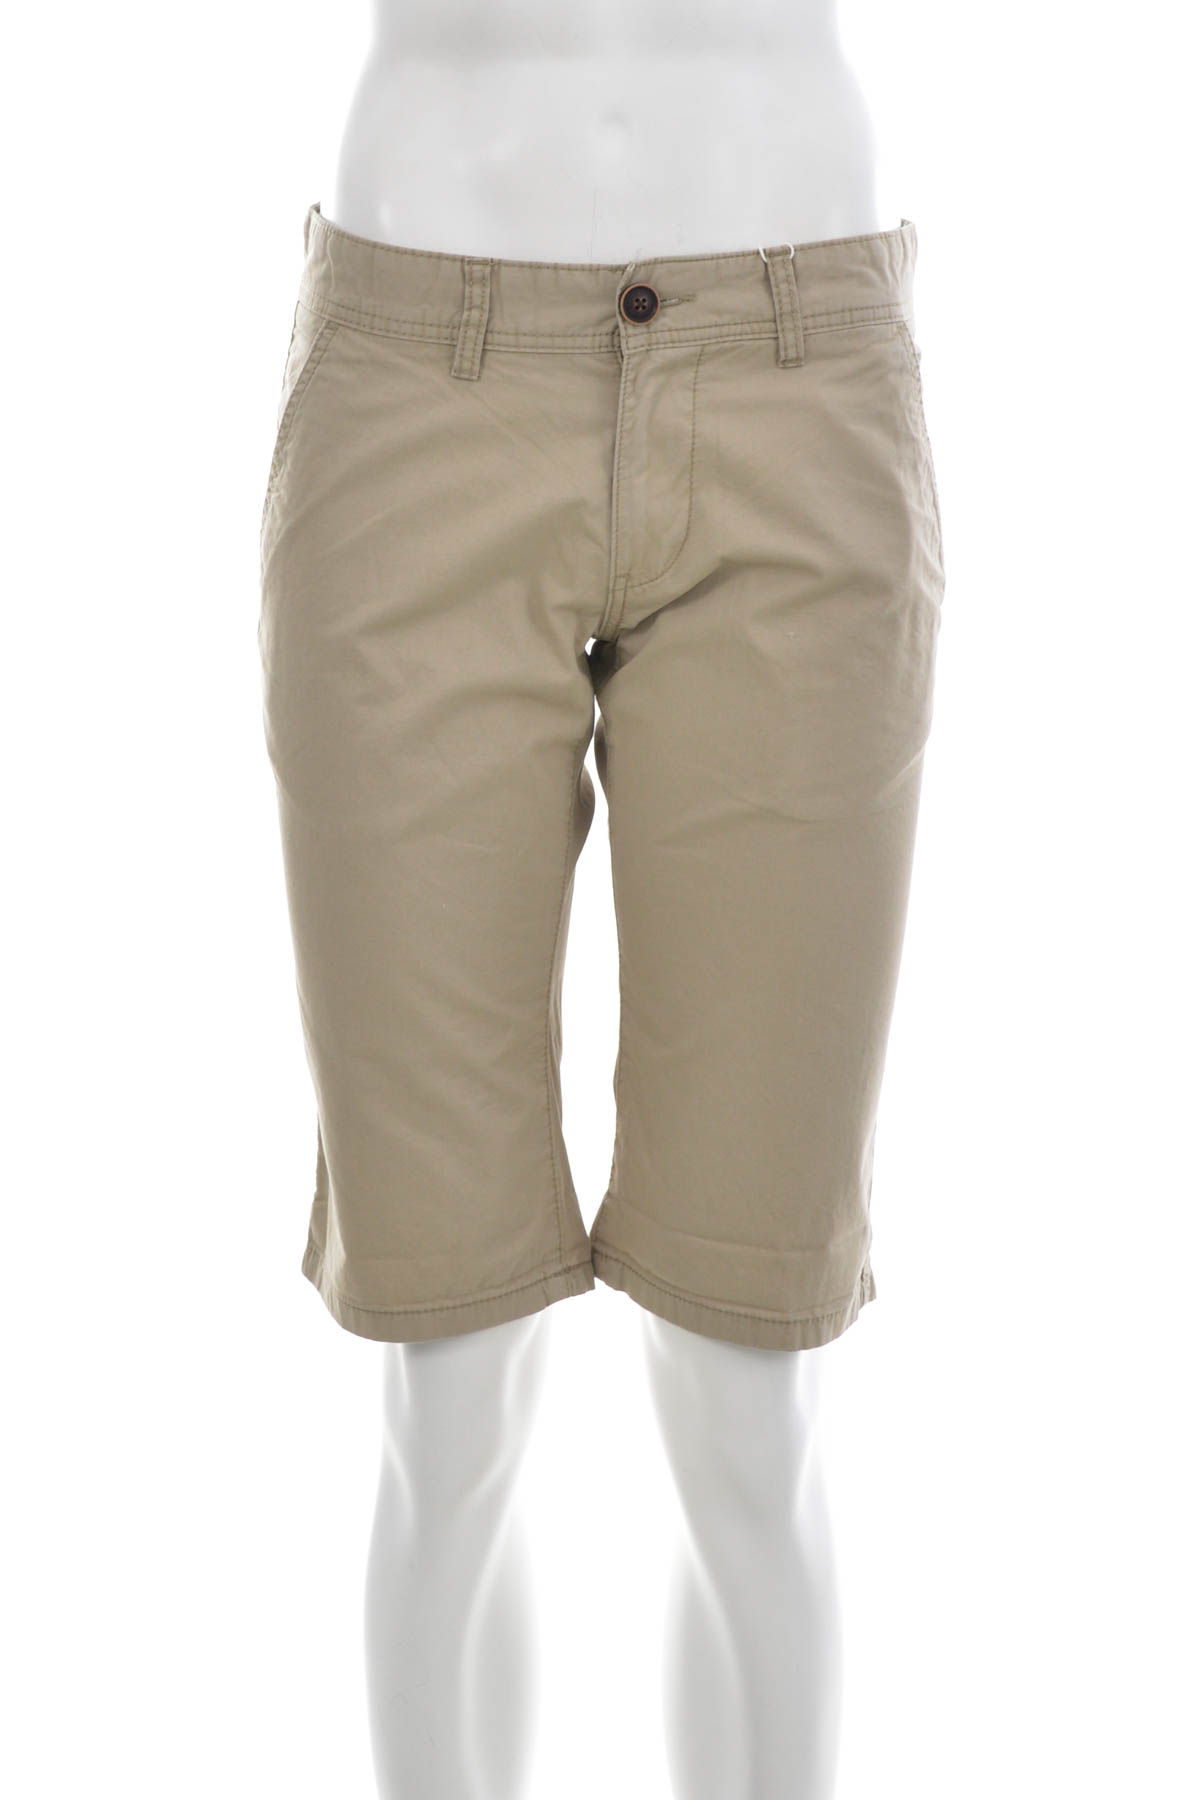 Men's shorts - Edc - 0